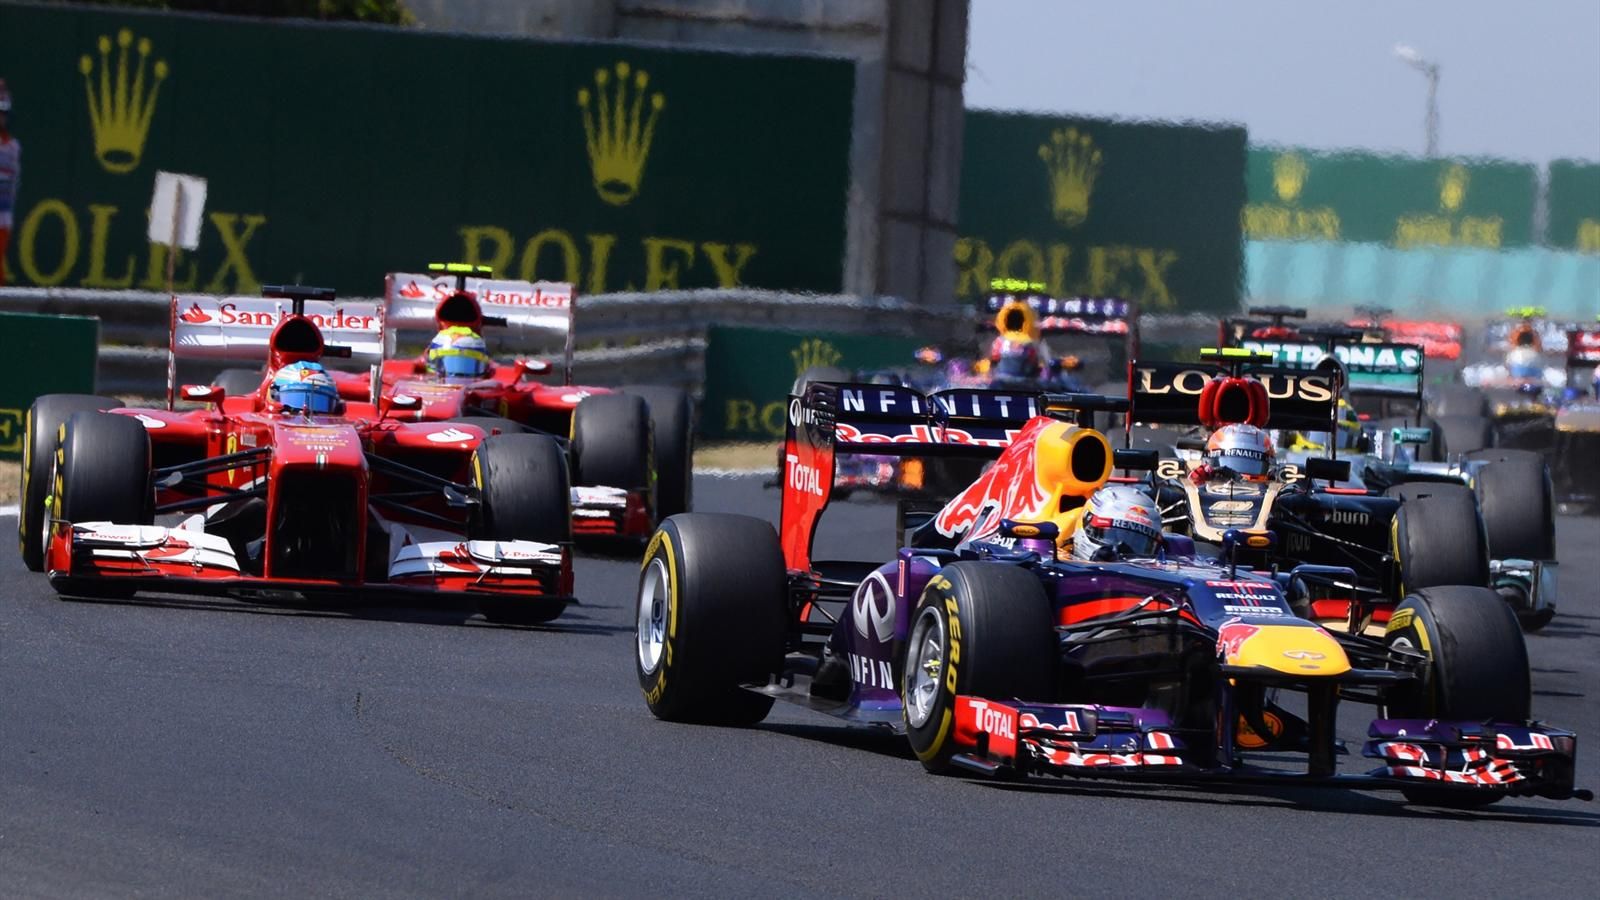 GP Hongrie en direct - Grand Prix Formule 1 de Hongrie en live streaming